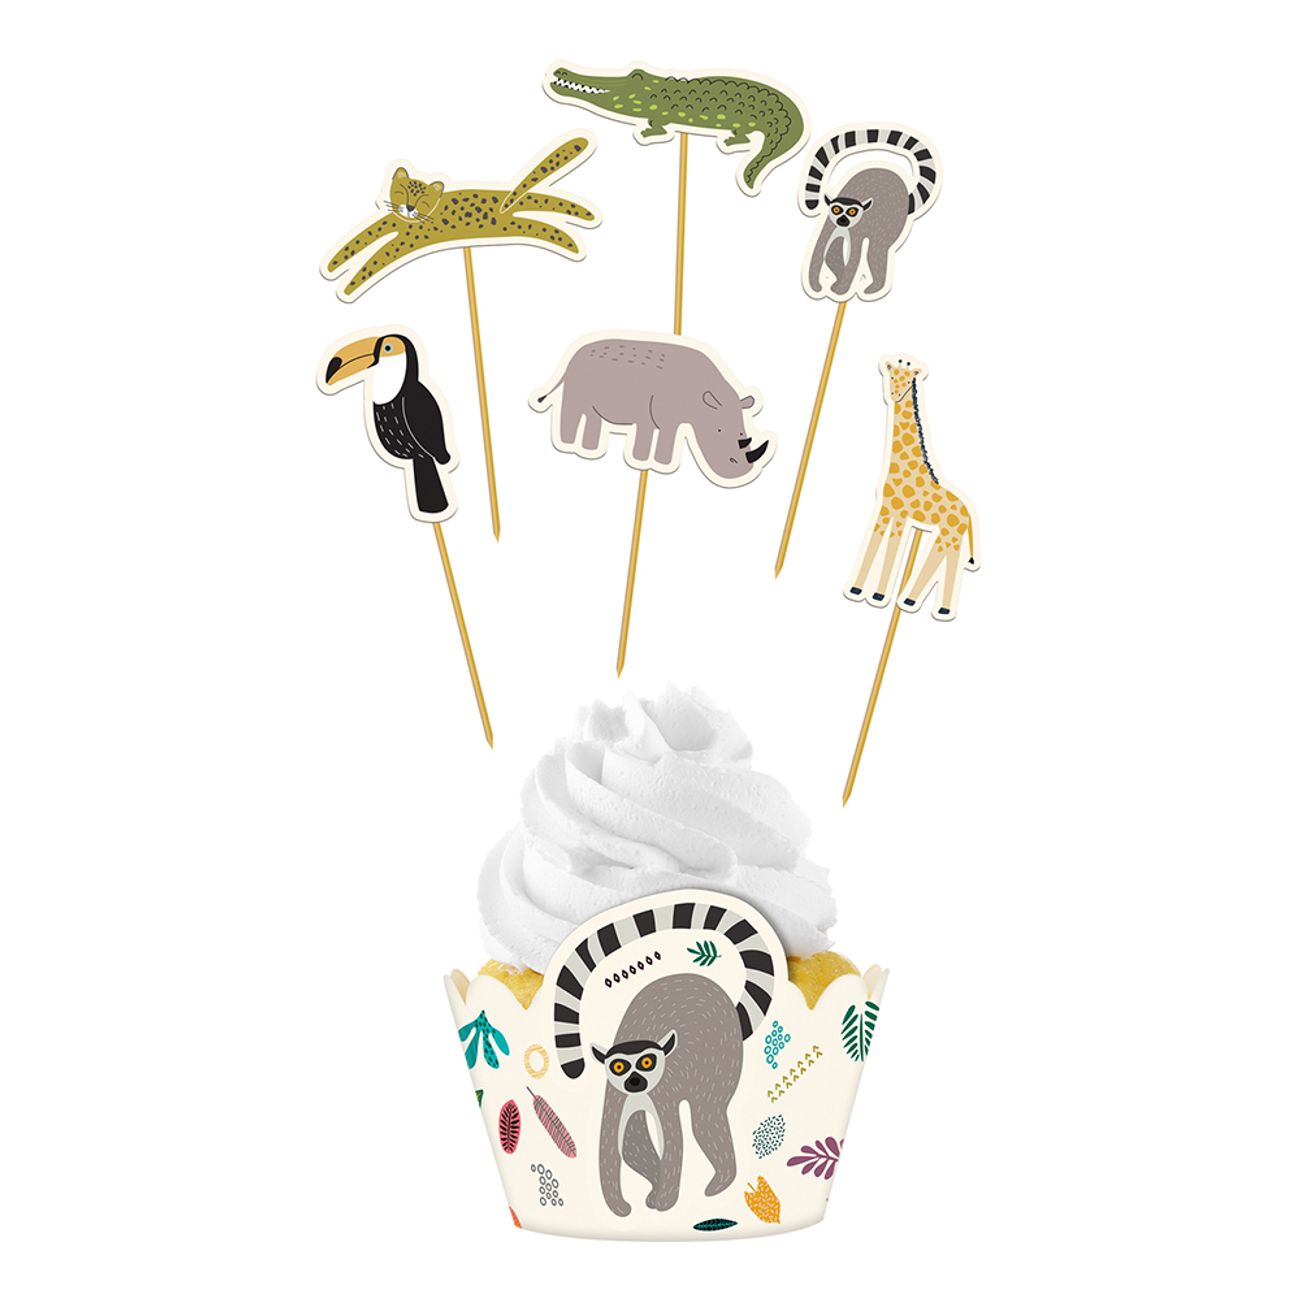 cupcake-kit-zoo-party-100617-1